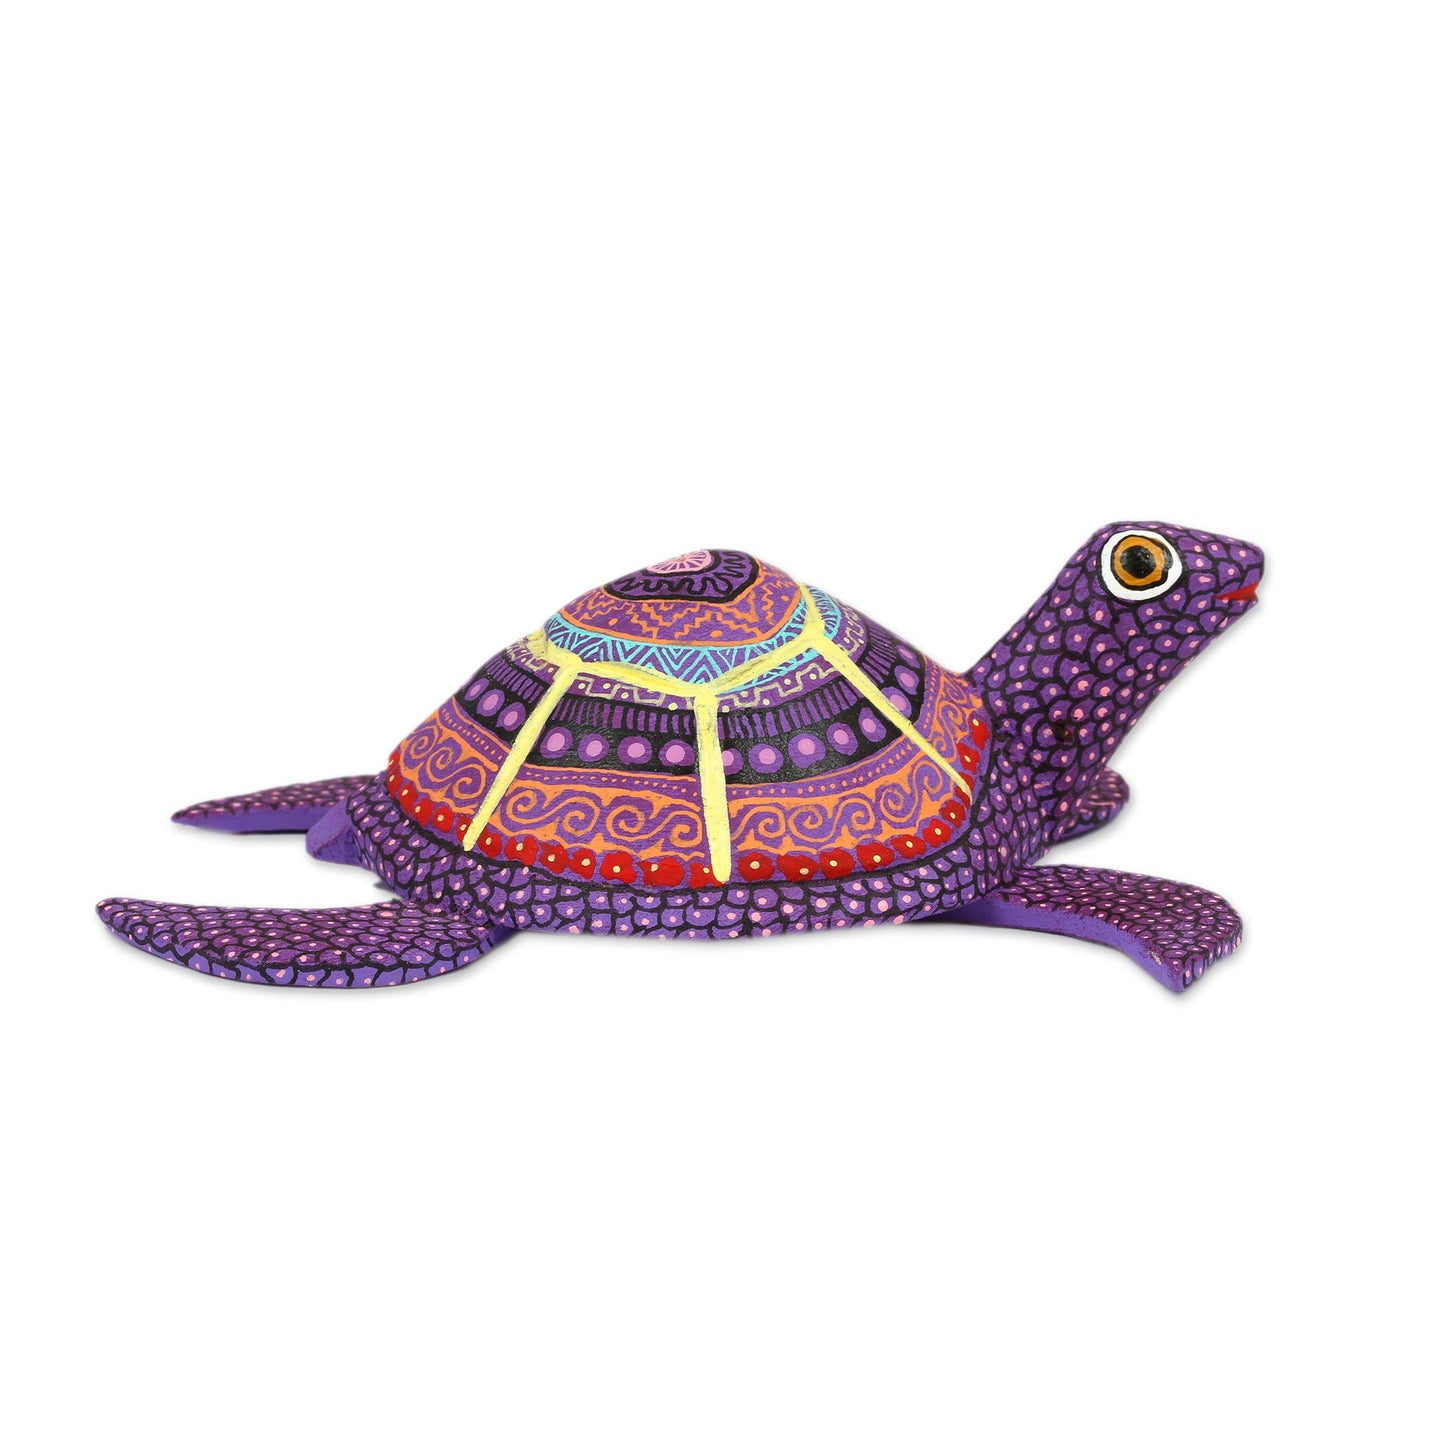 Exquisite Turtle Handcrafted Copal Wood Alebrije Turtle Figurine